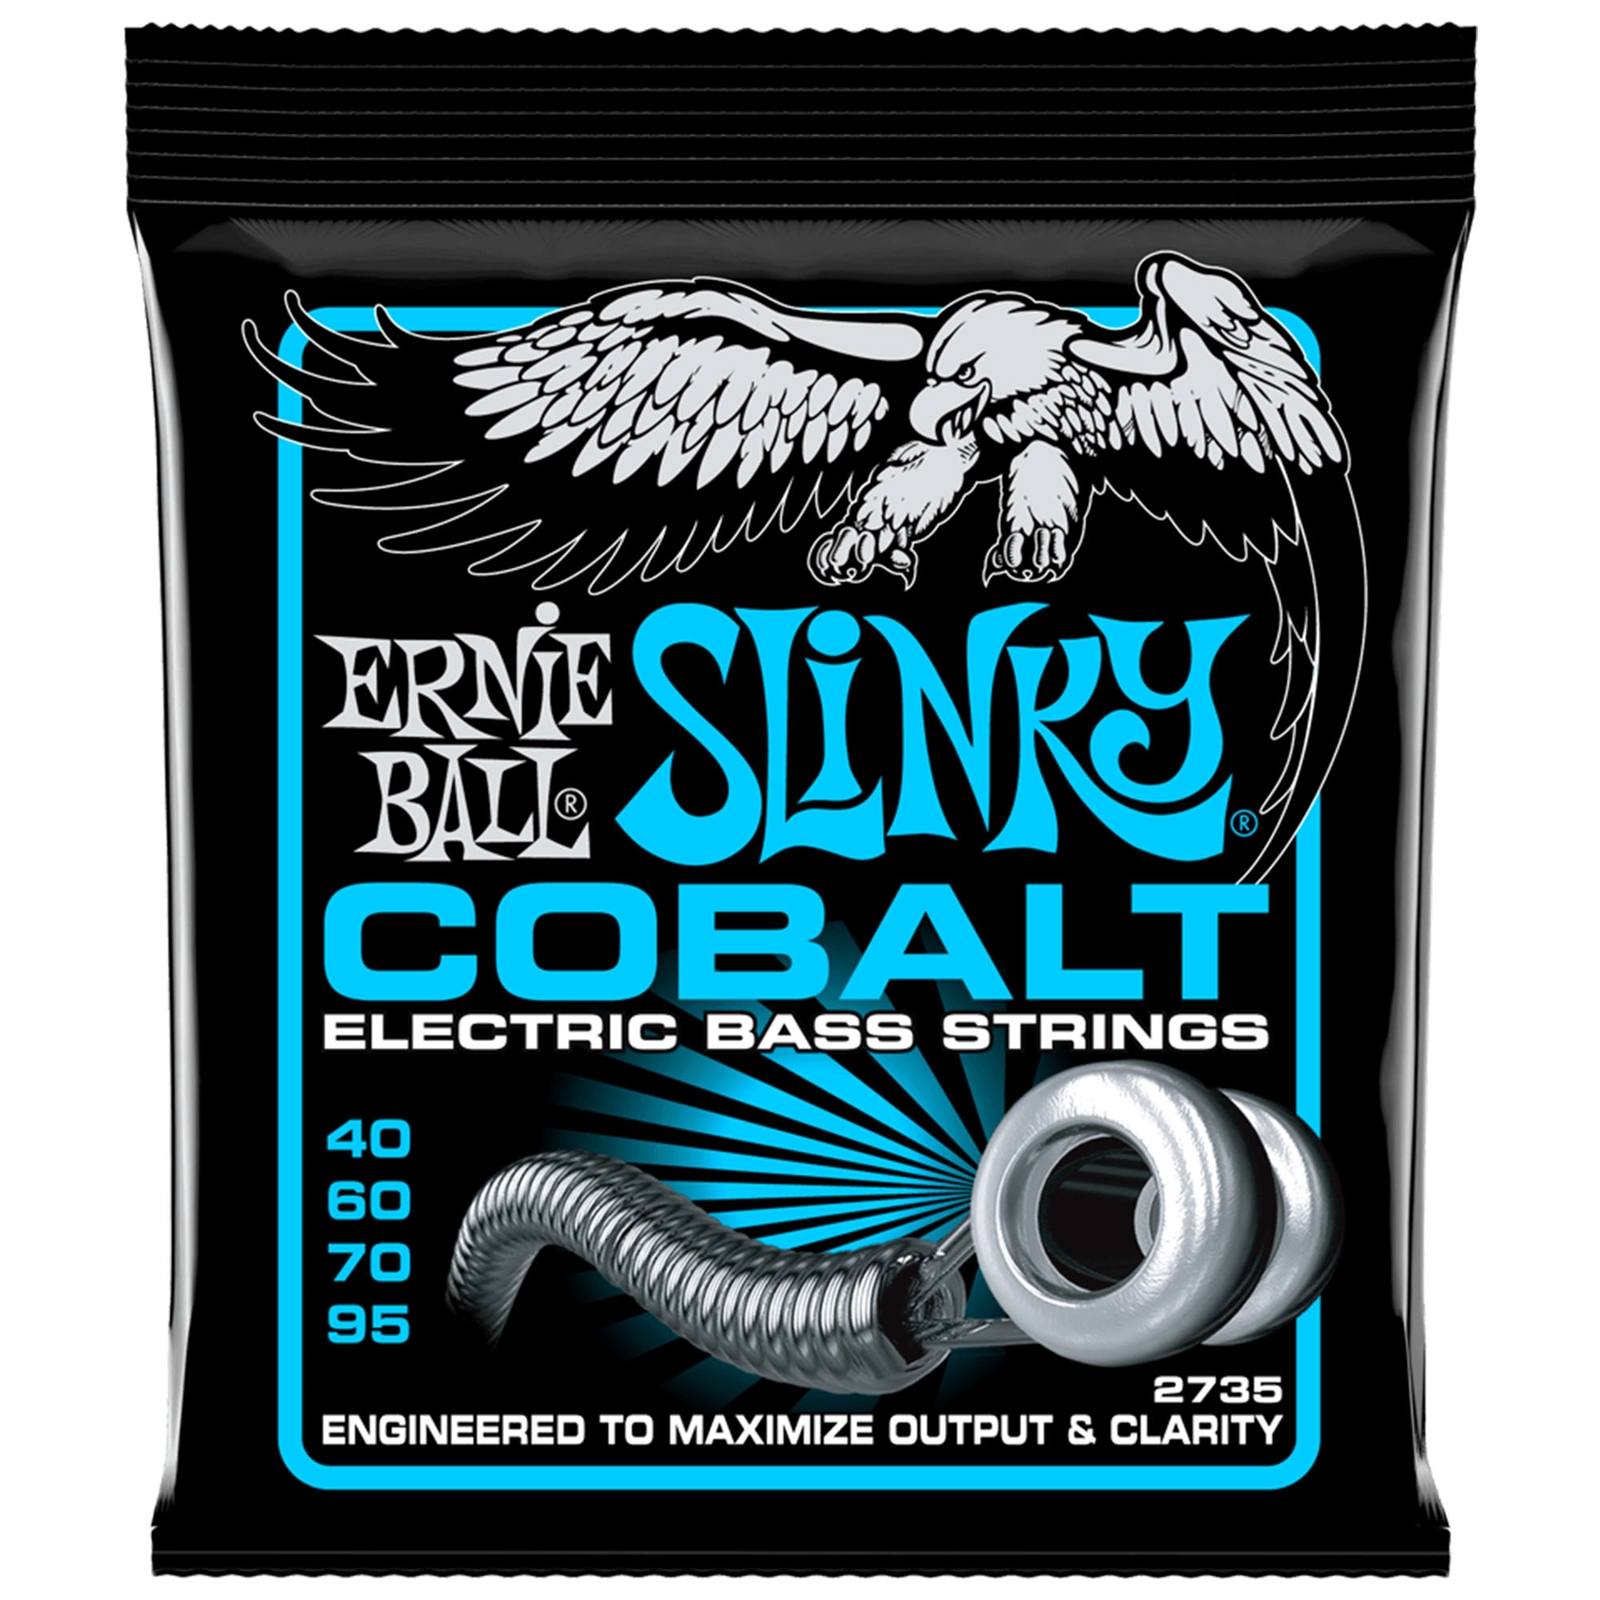 Ernie Ball Extra Slinky Cobalt Electric Bass Strings 40-95 Gauge